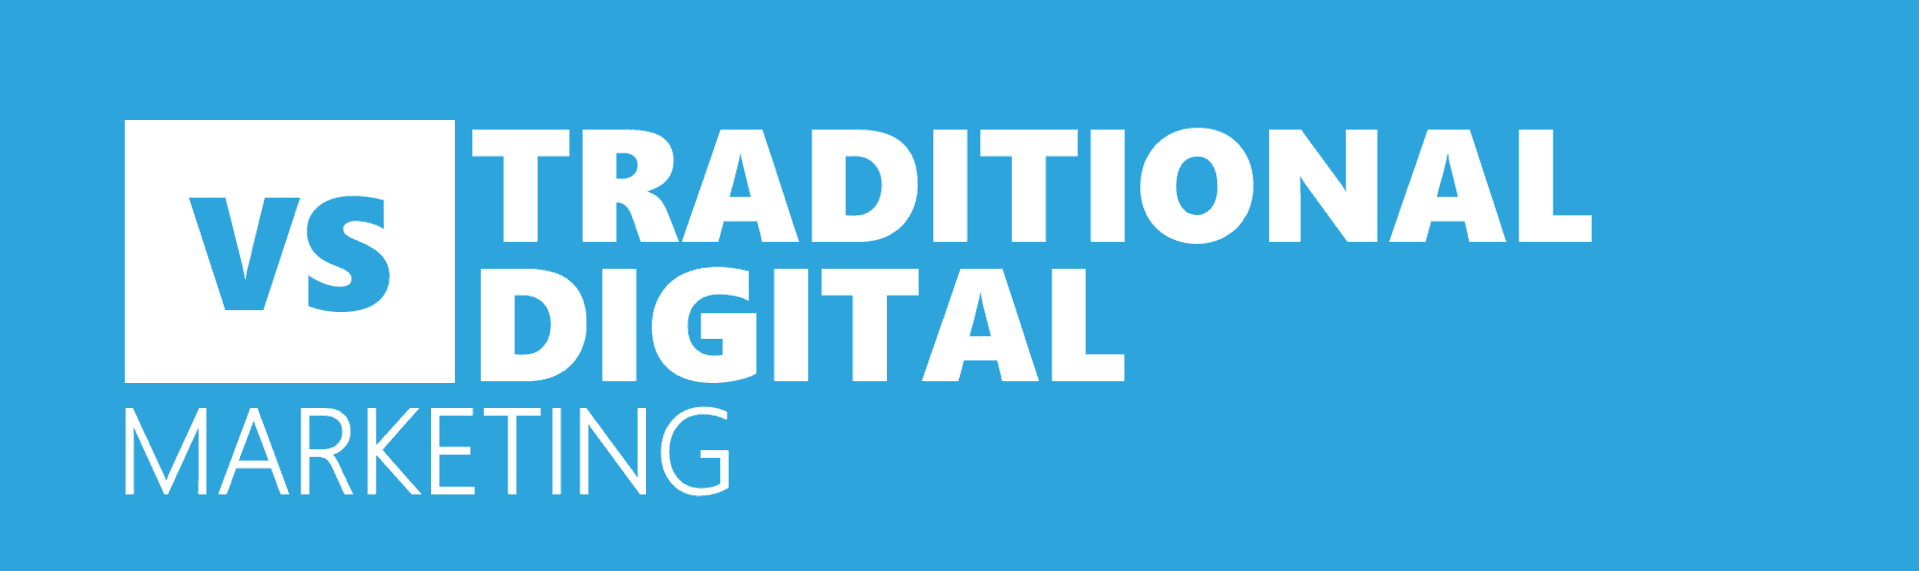 Traditional VS Digital Marketing